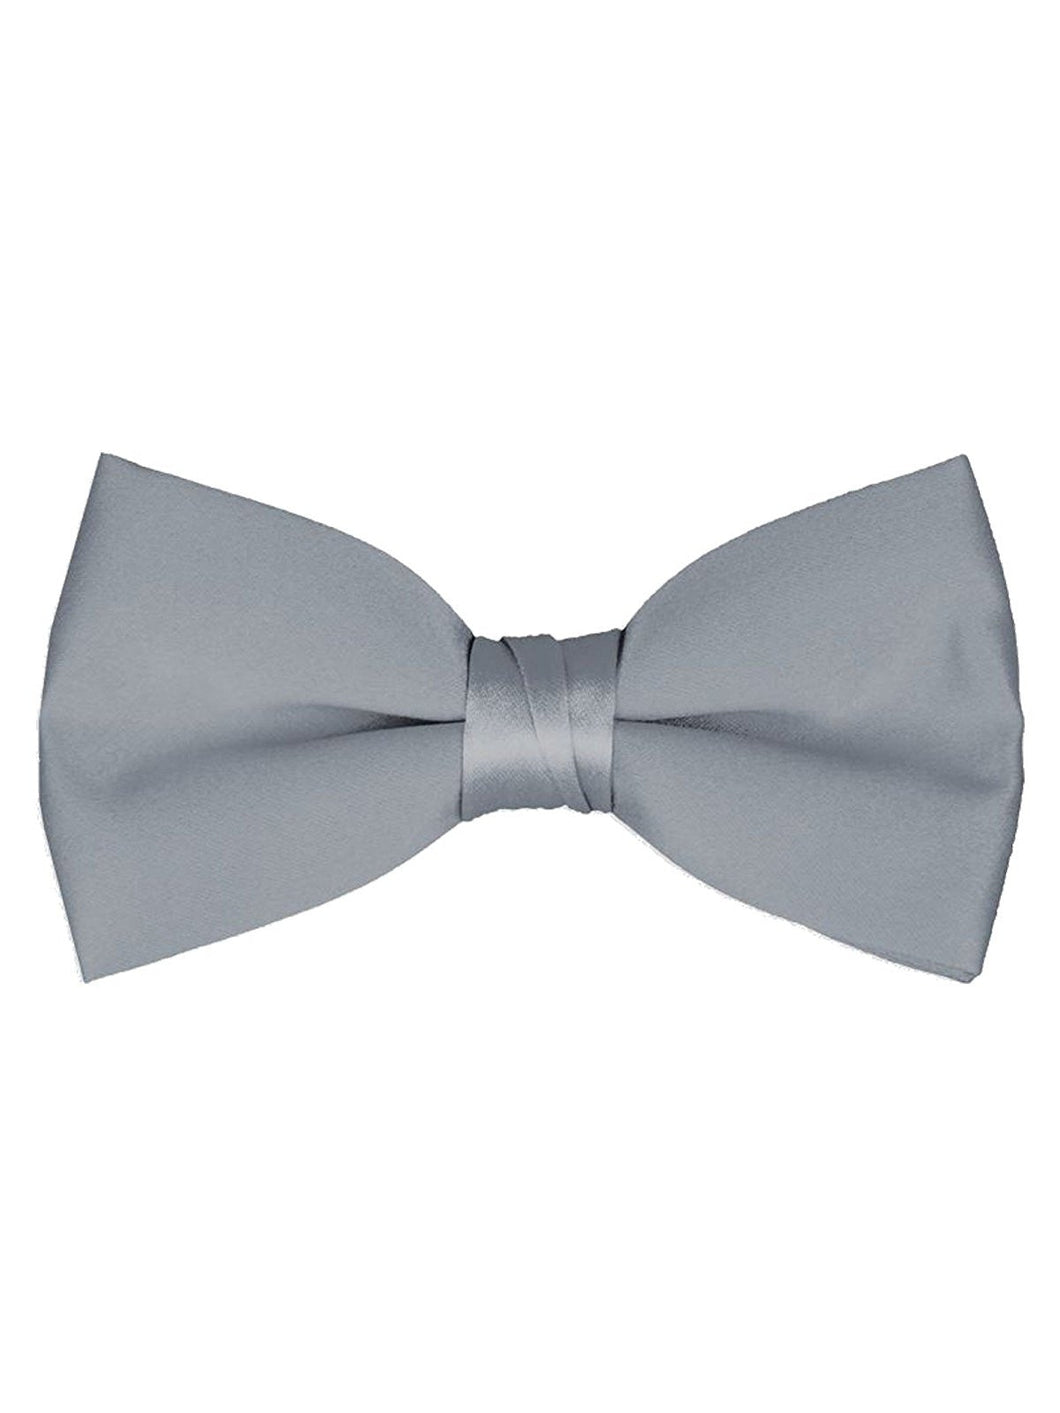 Men's Classic Pre-Tied Formal Tuxedo Bow Tie - Silver